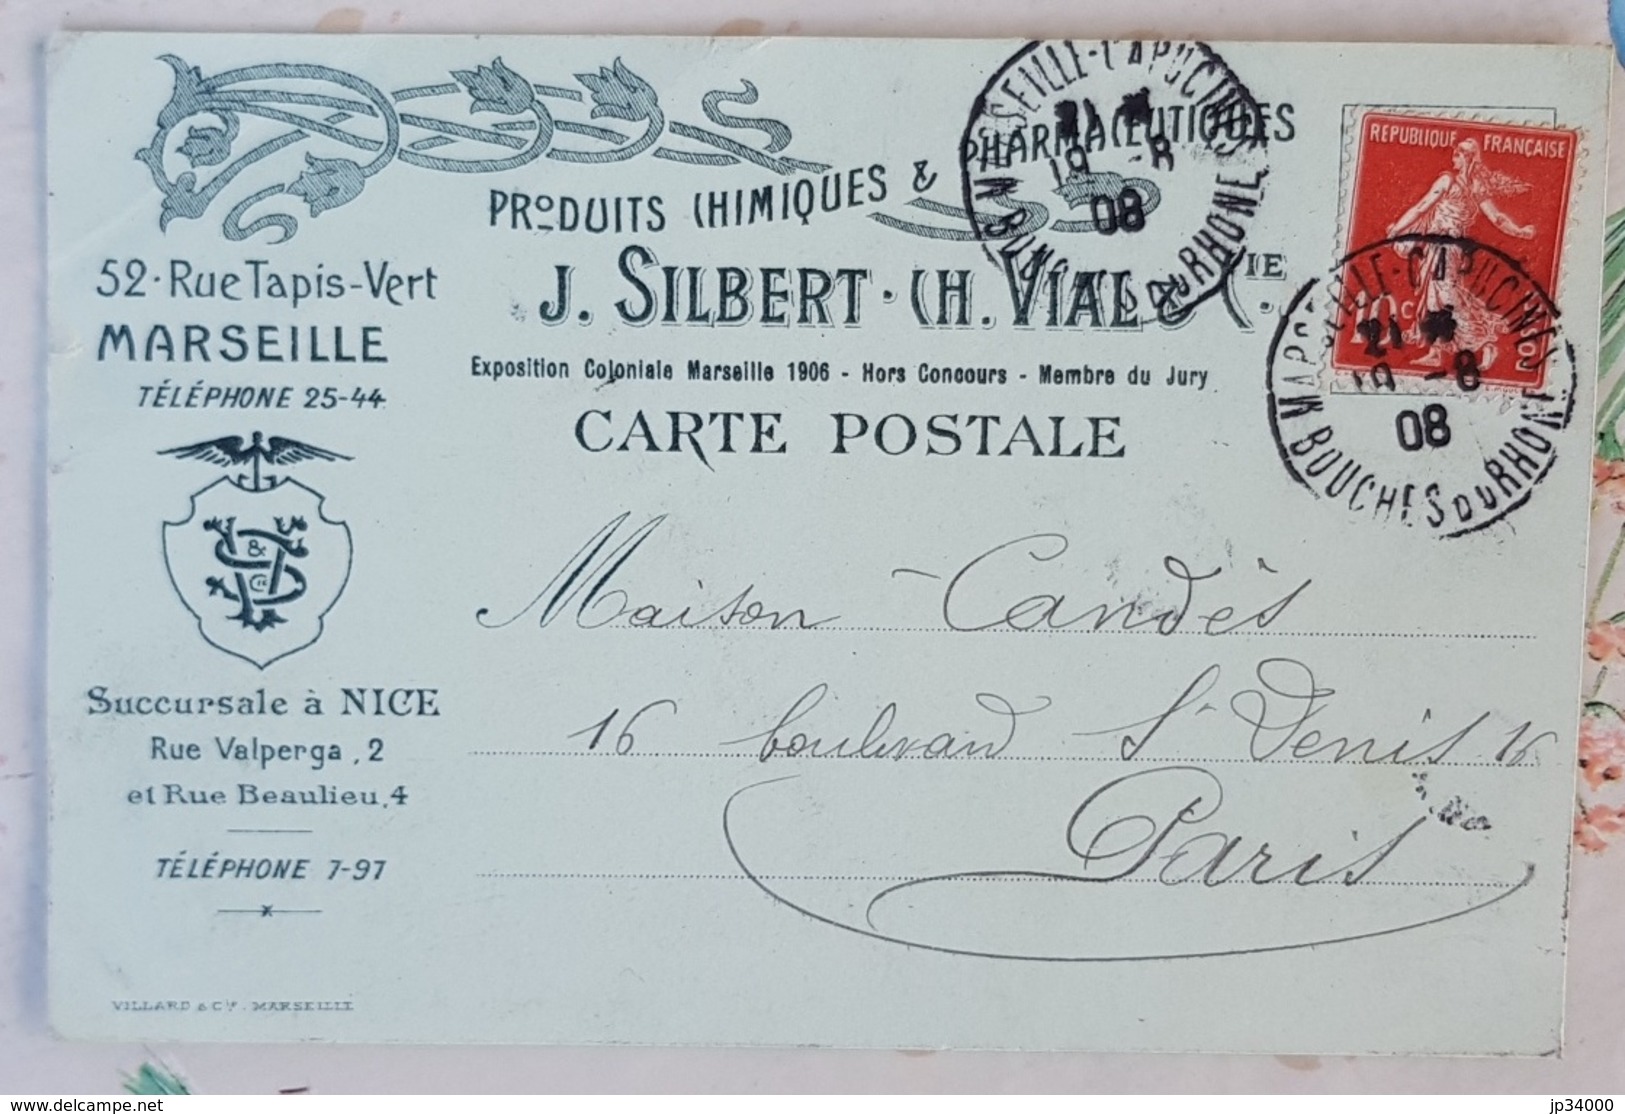 FRANCE Phamarcie, Medecine, Carte Postale Publicitaire SILBERT. VIAL à Marseille 1908 - Pharmacy